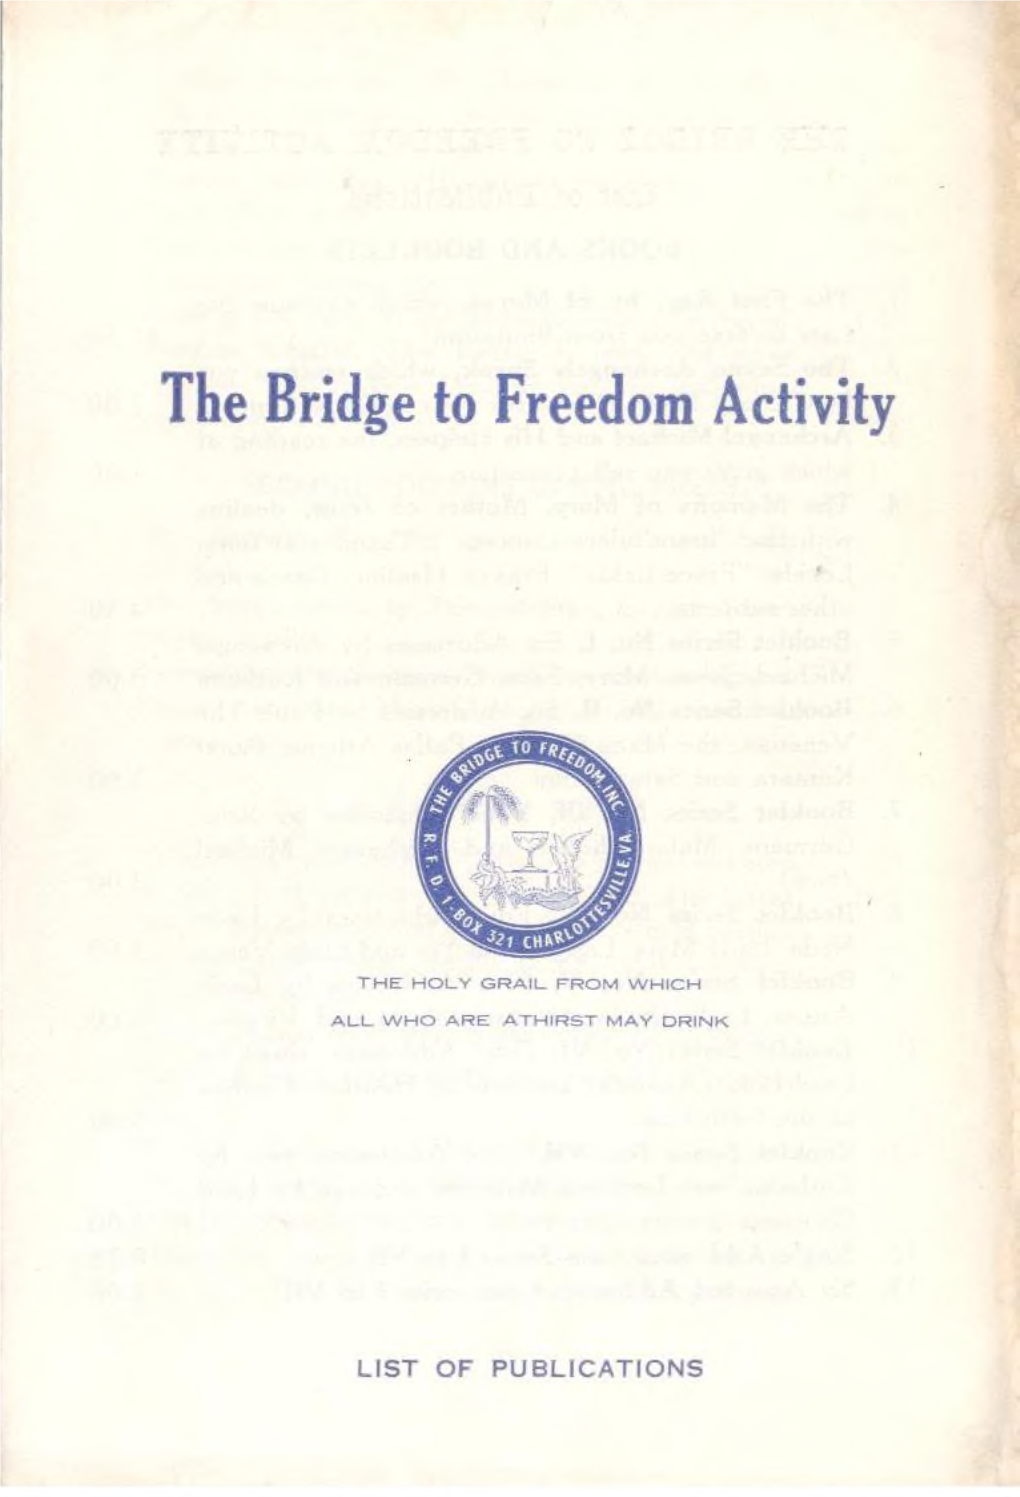 Bridge to Freedom Activity Publication List